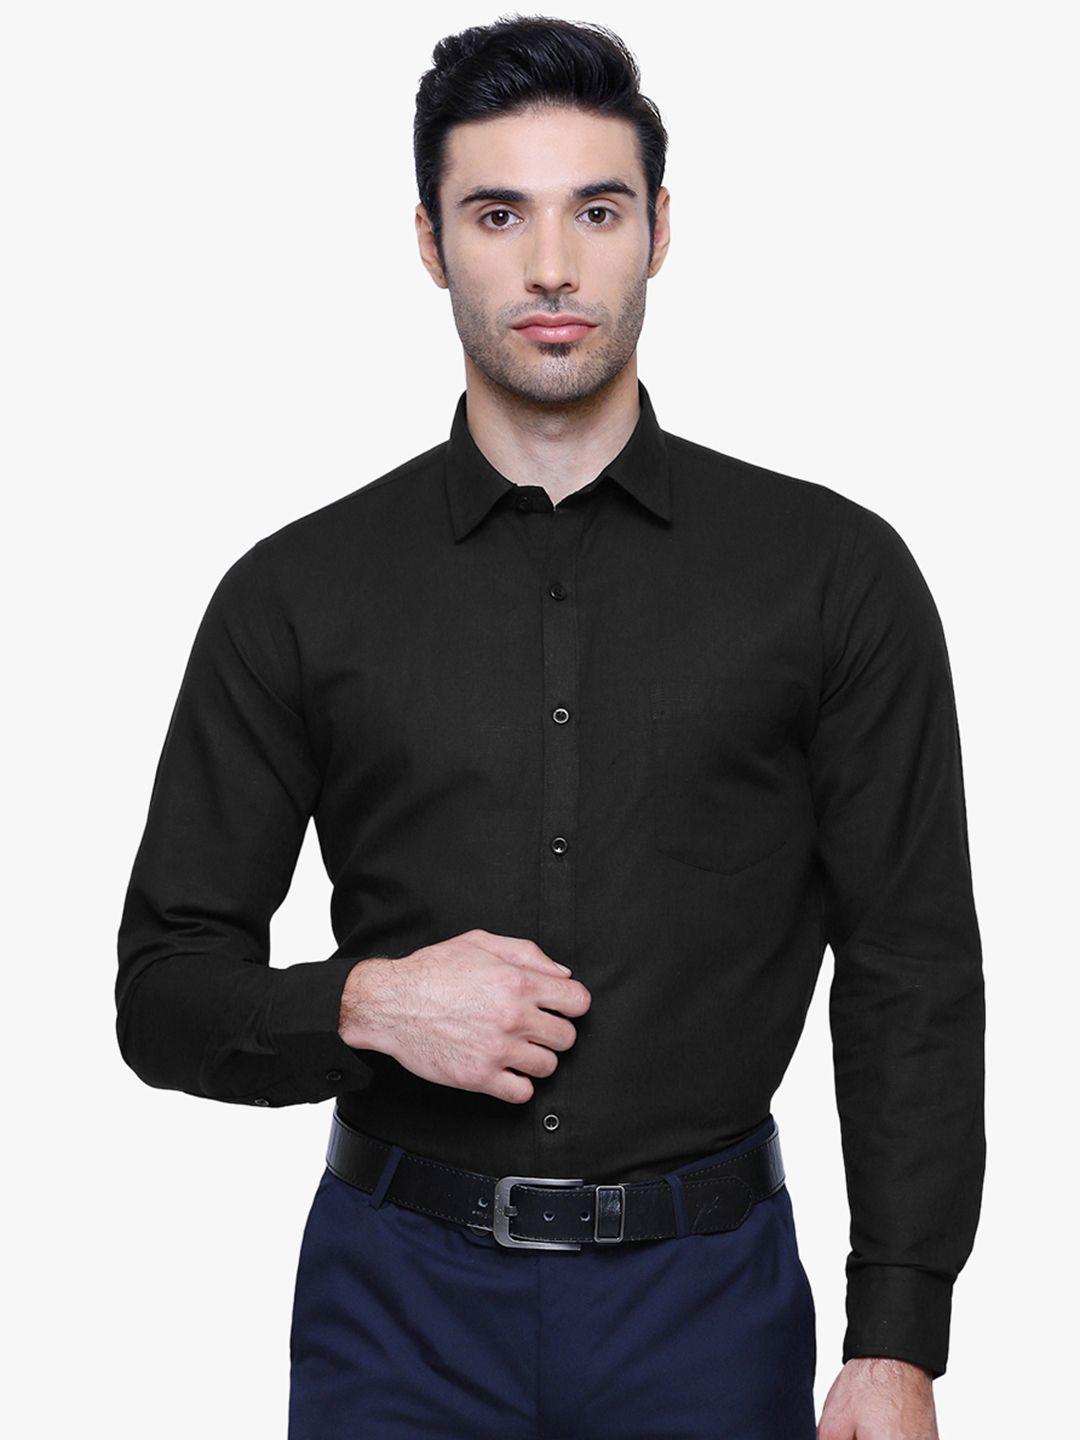 southbay men black smart formal shirt